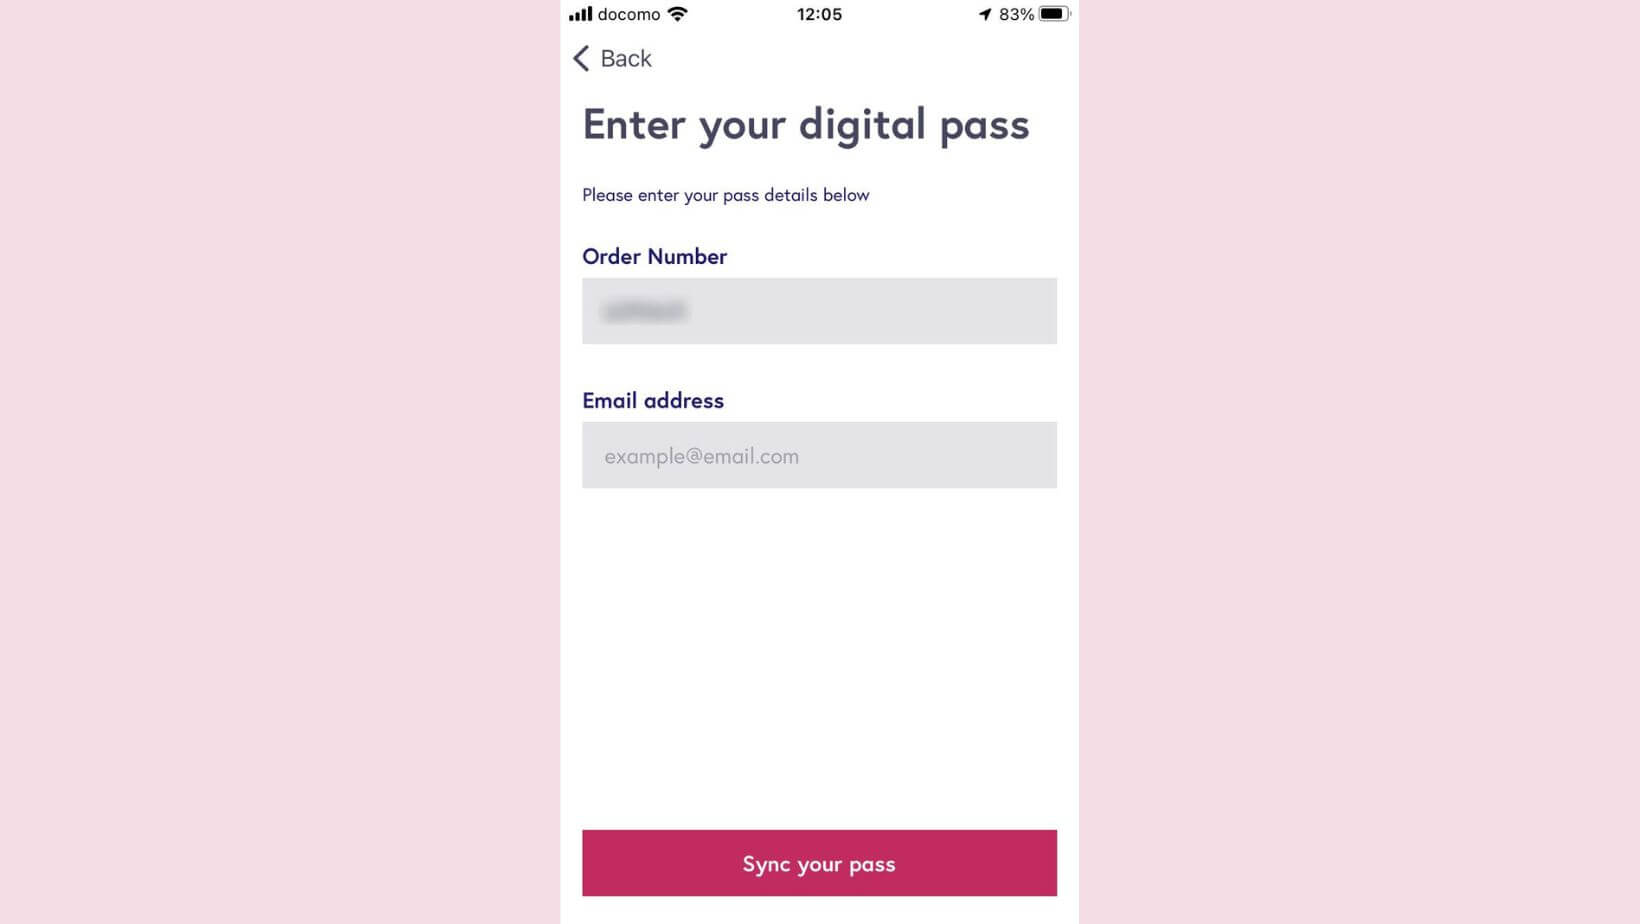 Enter your digital pass